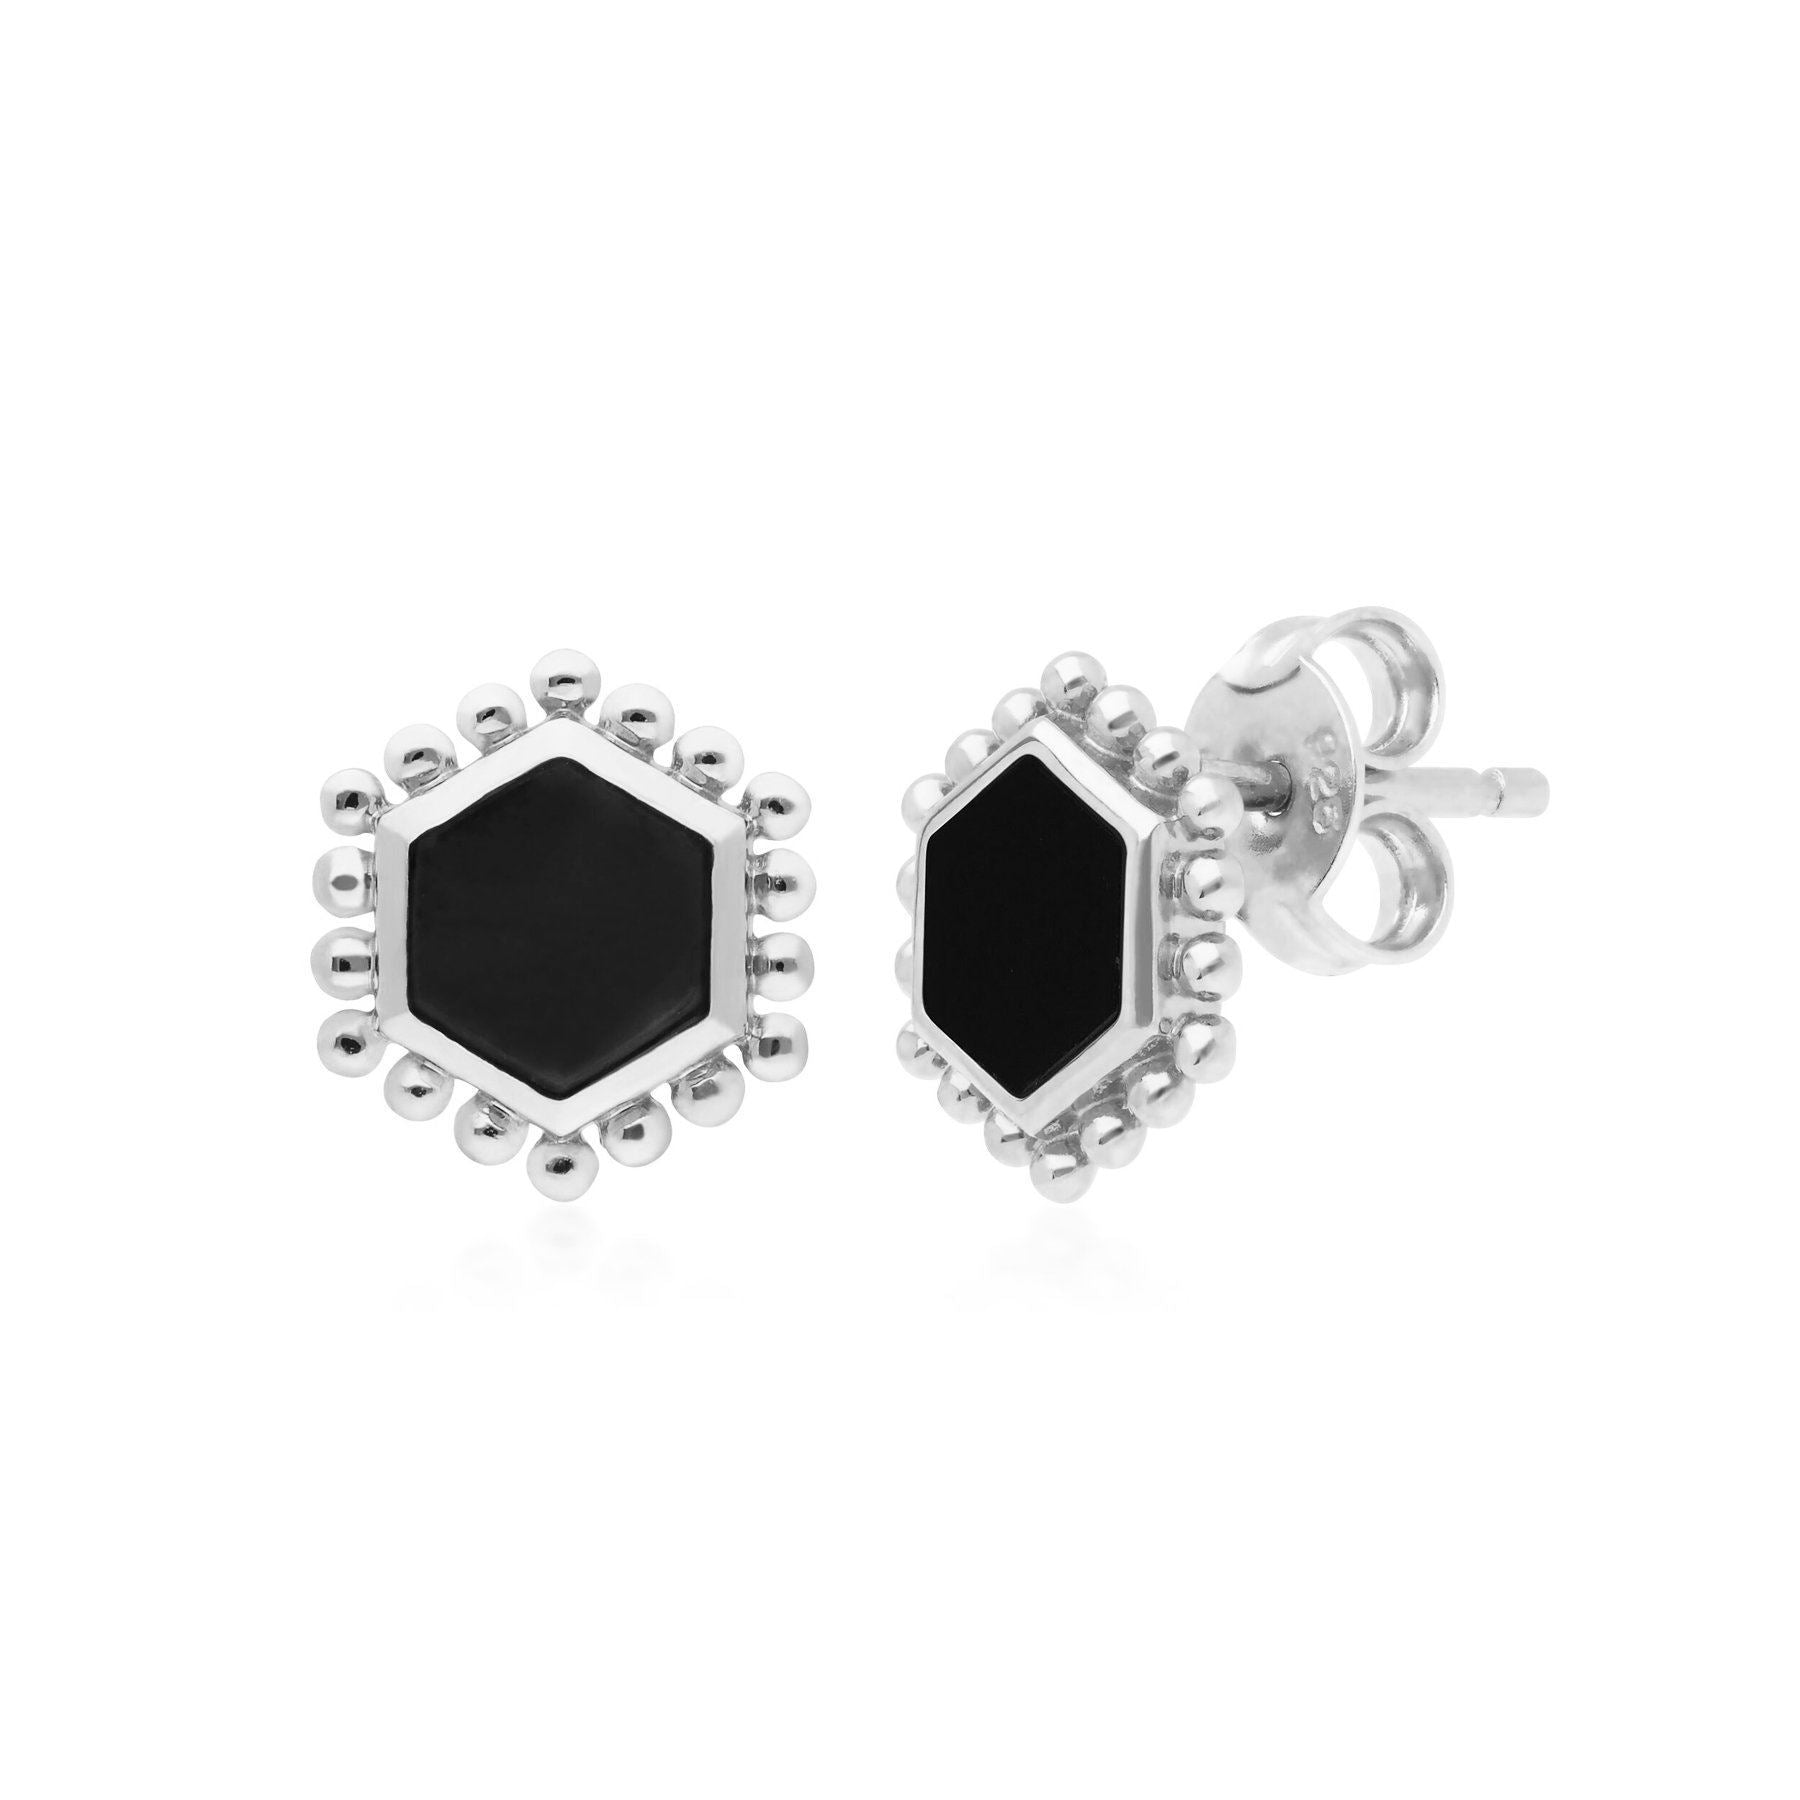 Black Onyx Flat Slice Hex Stud Earrings in Sterling Silver